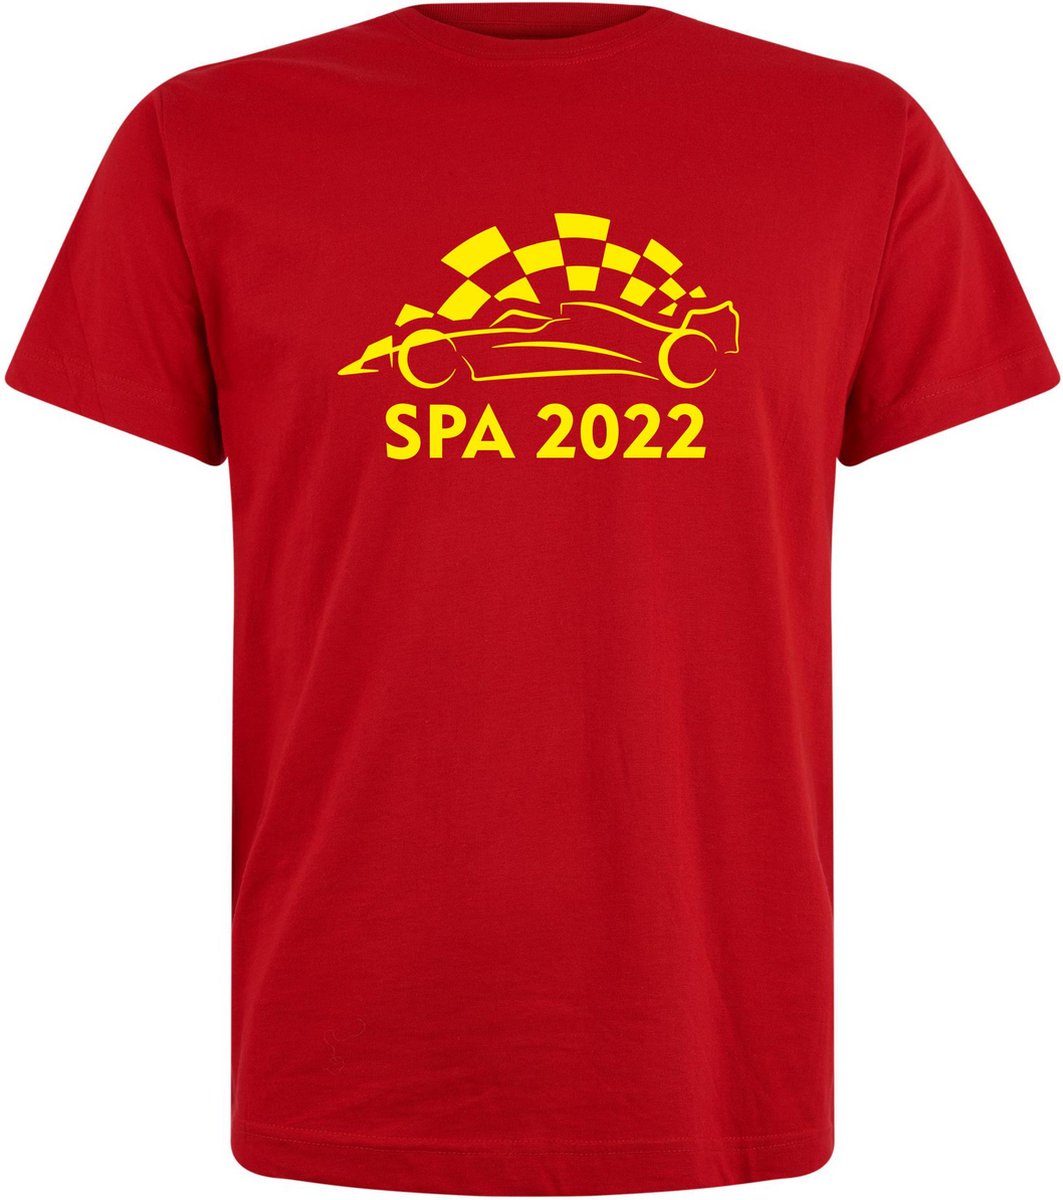 T-shirt kinderen Spa 2022 met raceauto | Max Verstappen / Red Bull Racing / Formule 1 fan | Grand Prix Circuit Spa-Francorchamps | kleding shirt | Rood | maat 68